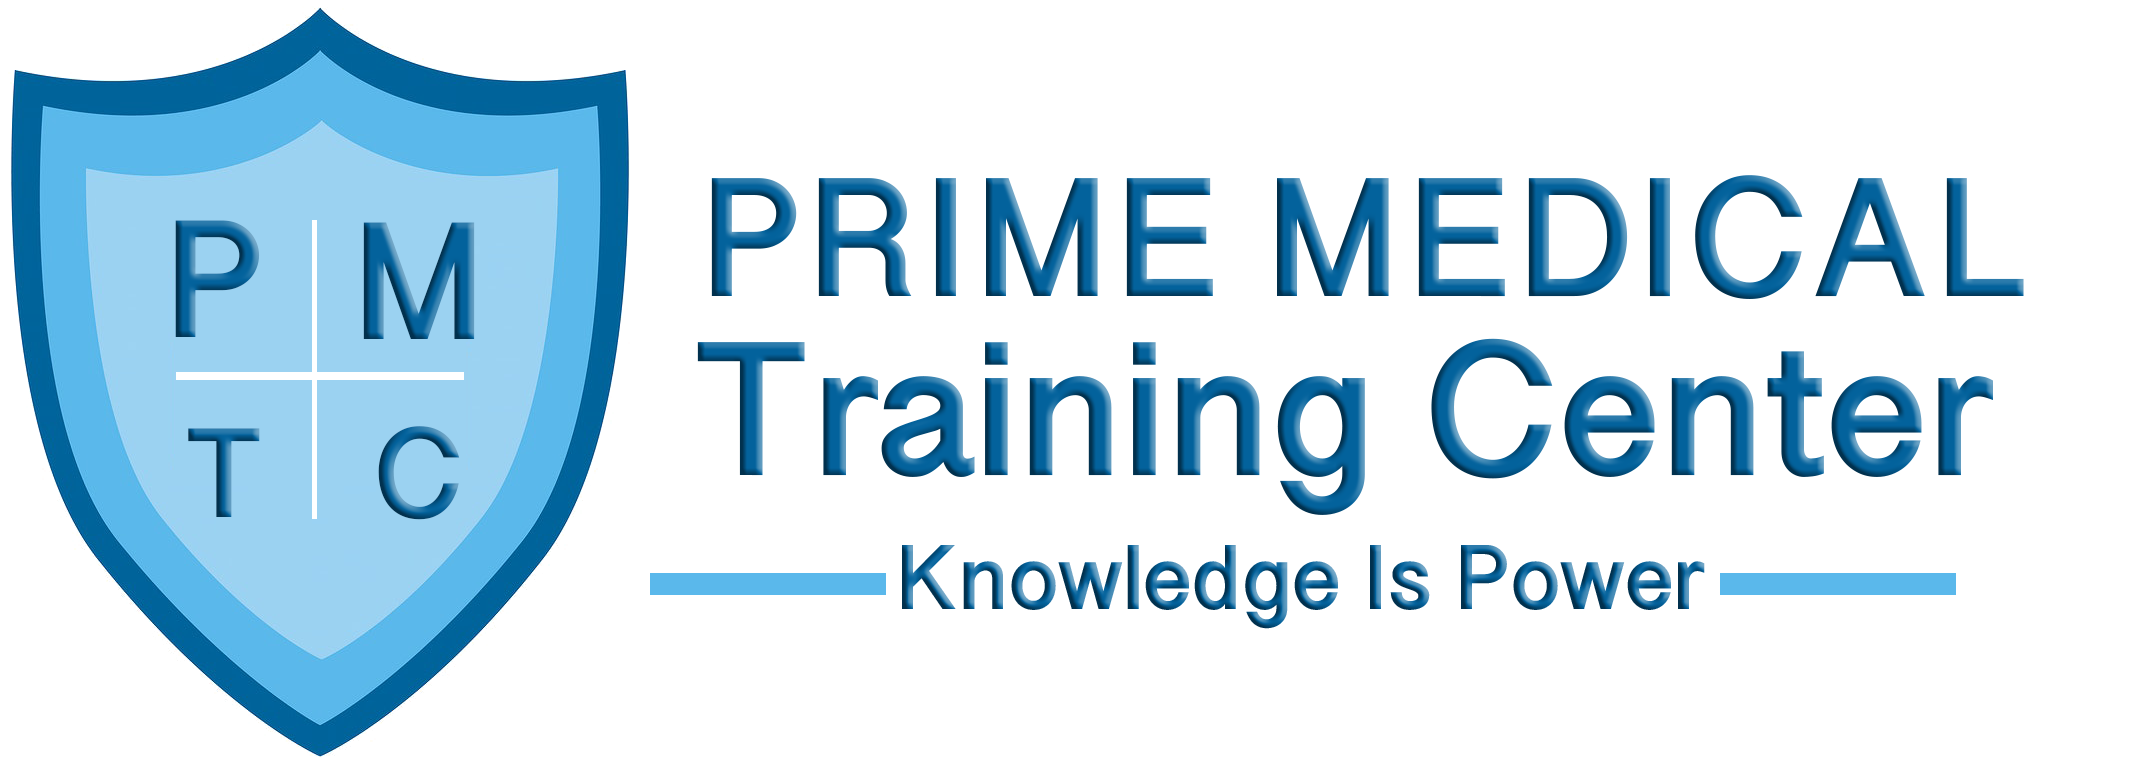 Prime Medical Training Center